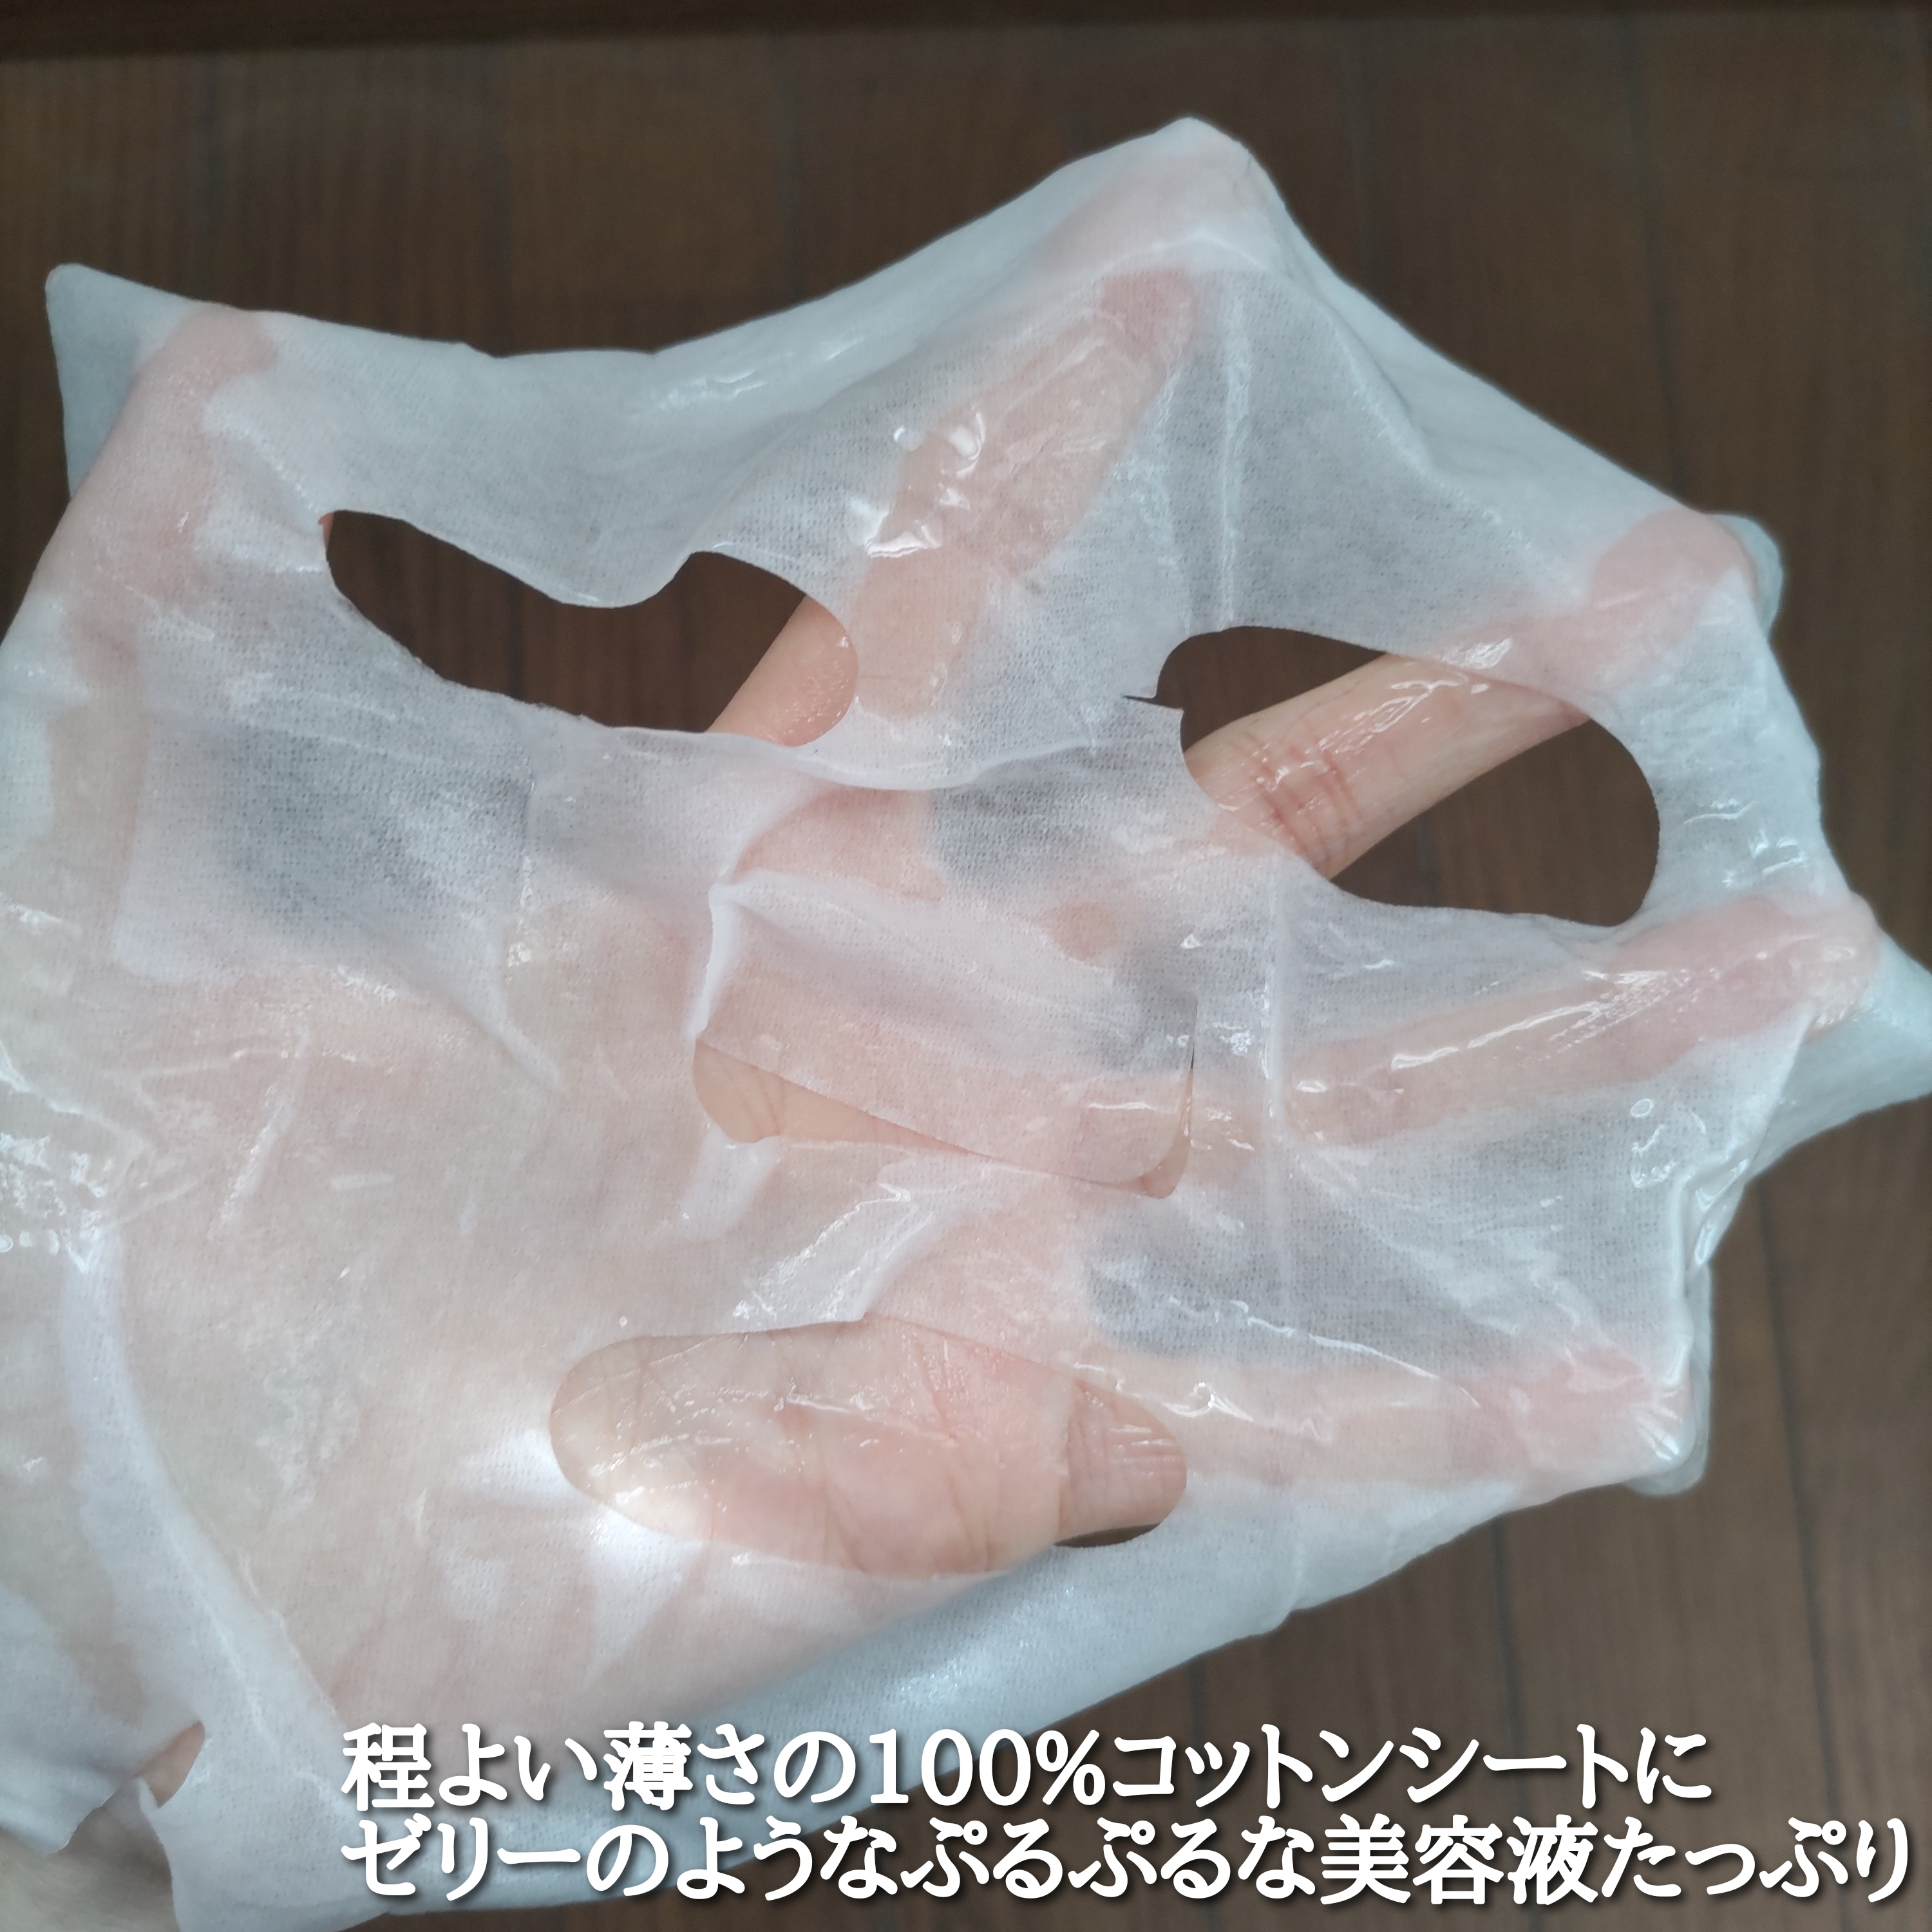 BANOBAGI ビタジェニック ゼリーマスク バイタライジングを使ったYuKaRi♡さんのクチコミ画像7